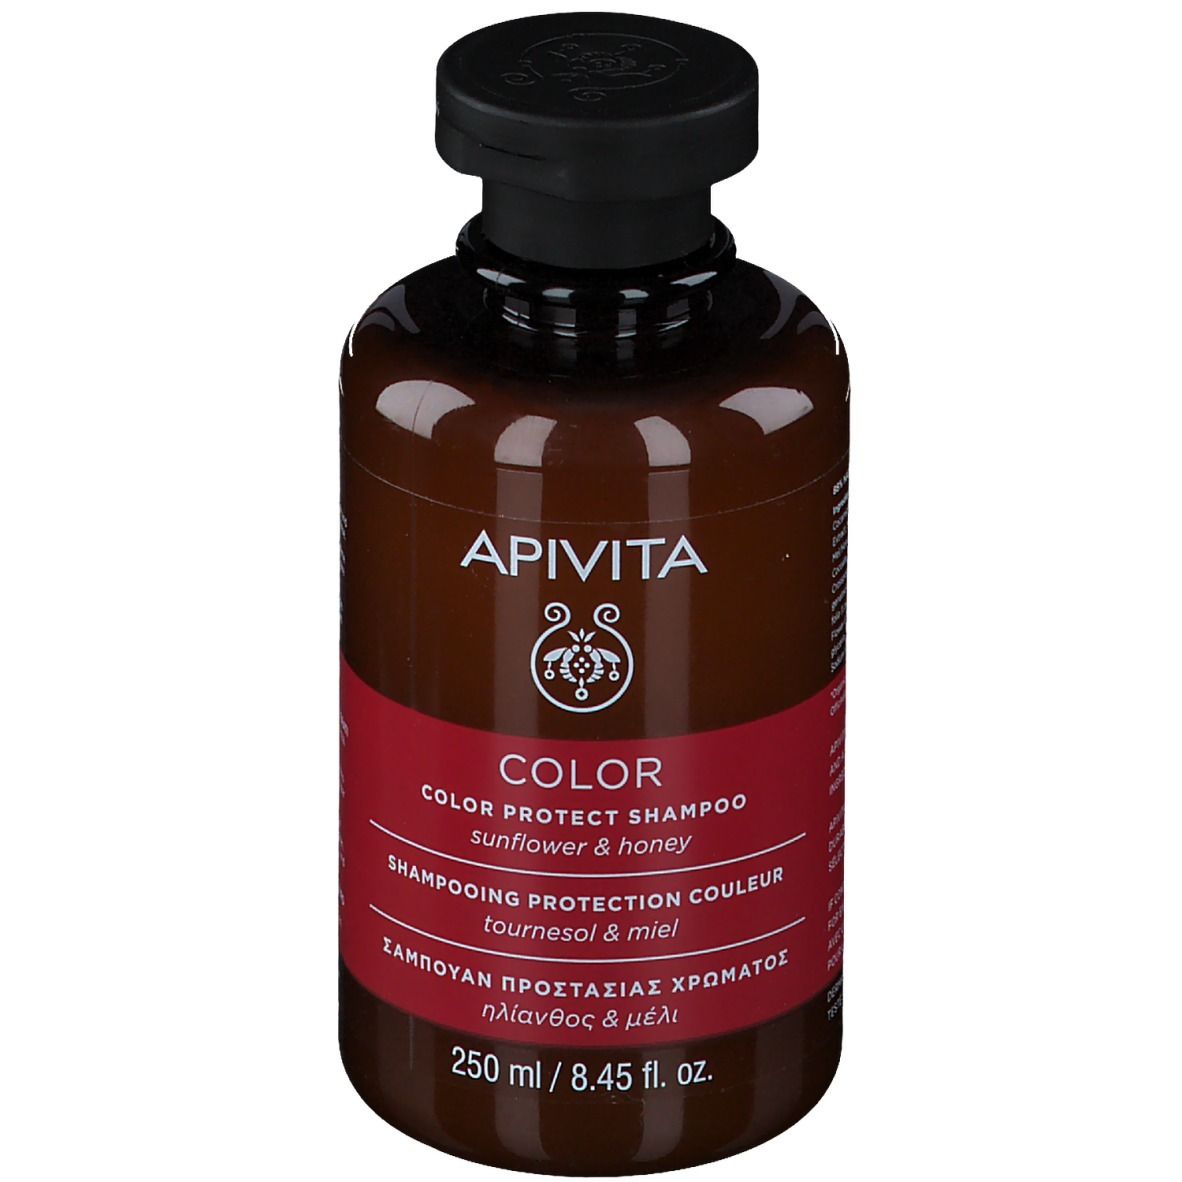 APIVITA Shampoo Color Protect